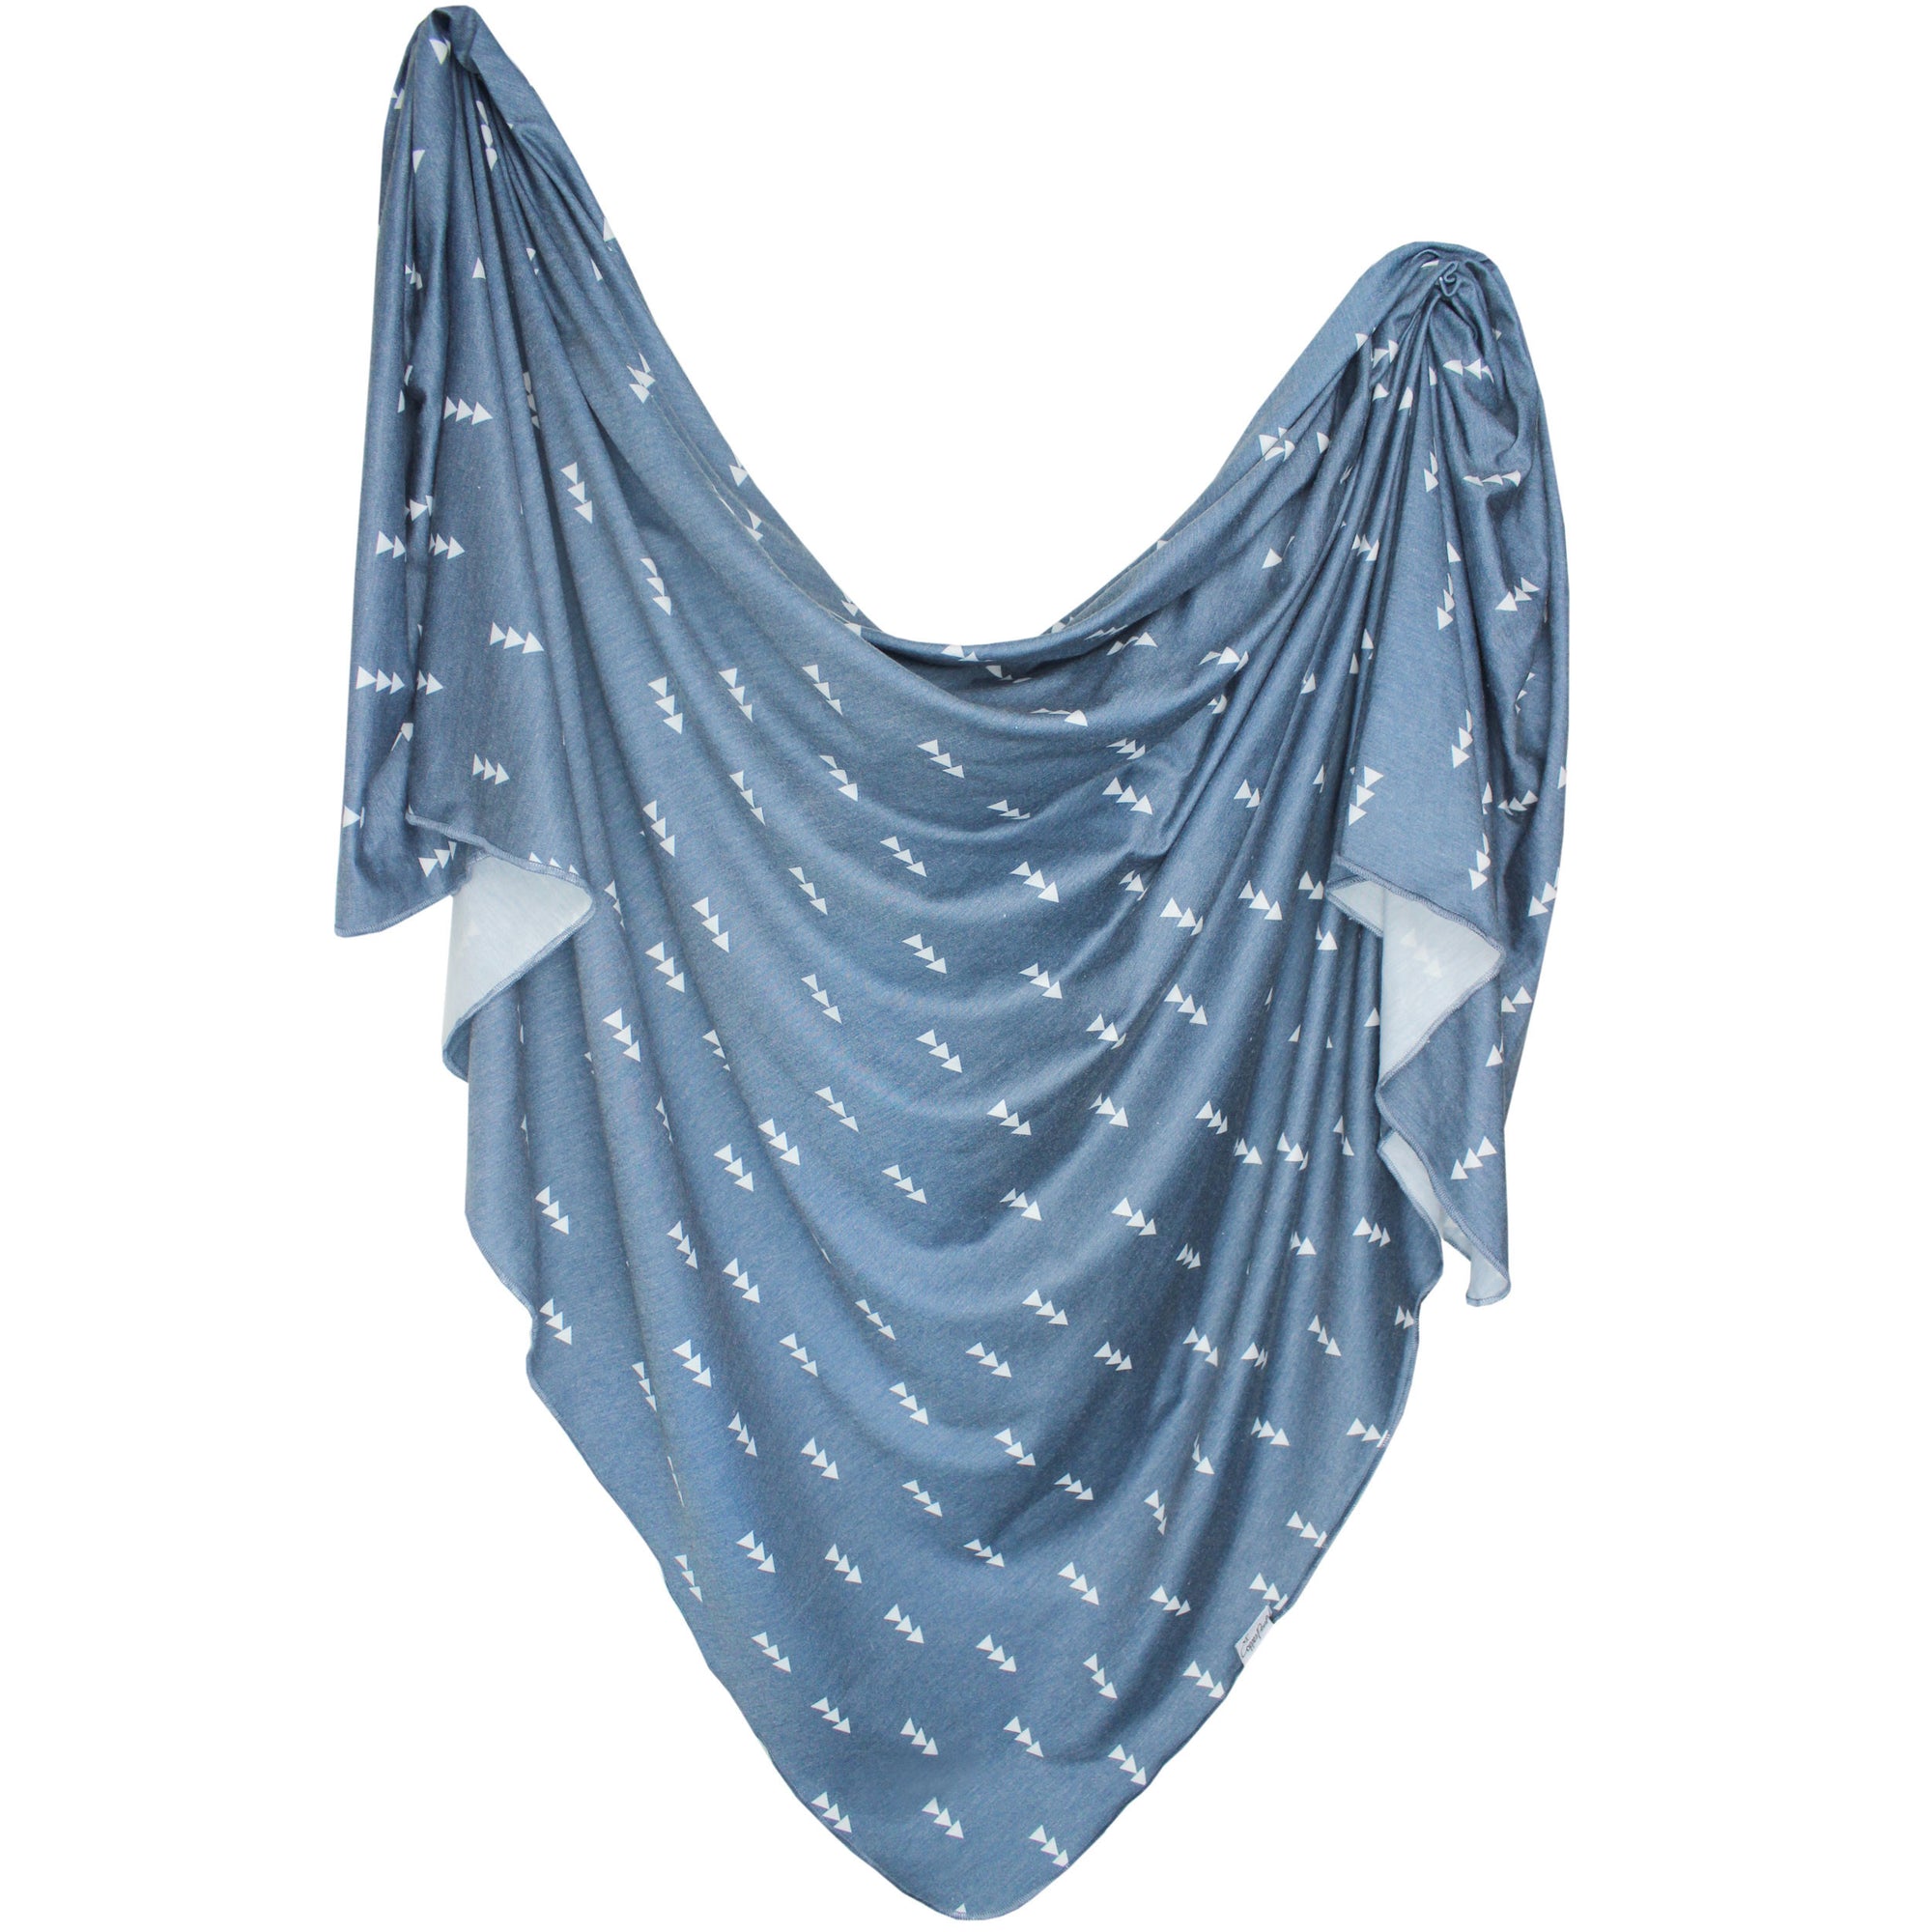 Knit Swaddle Blanket - North